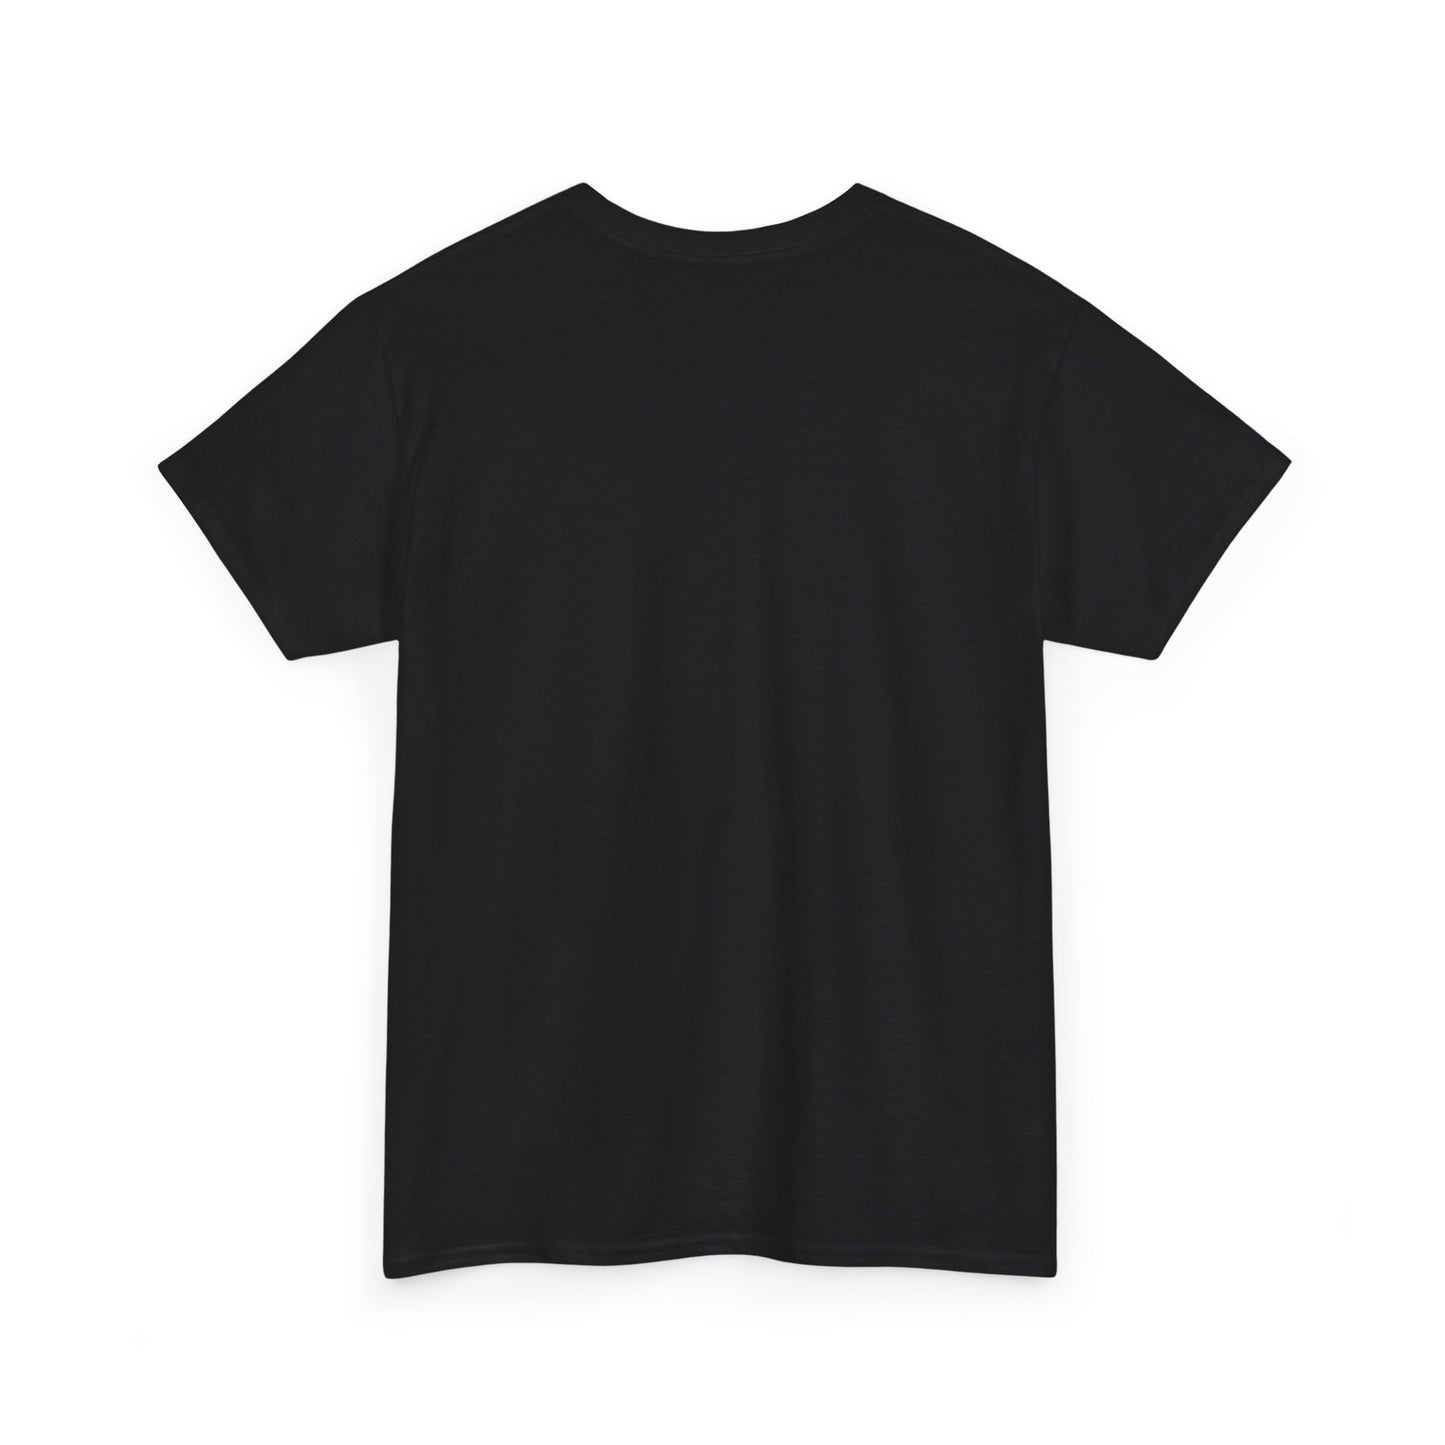 Vacation T-Shirt, Camping T- Shirt, Adventure Tee 100% Cotton, Black Colour, AUS - USA warehouse, free post.